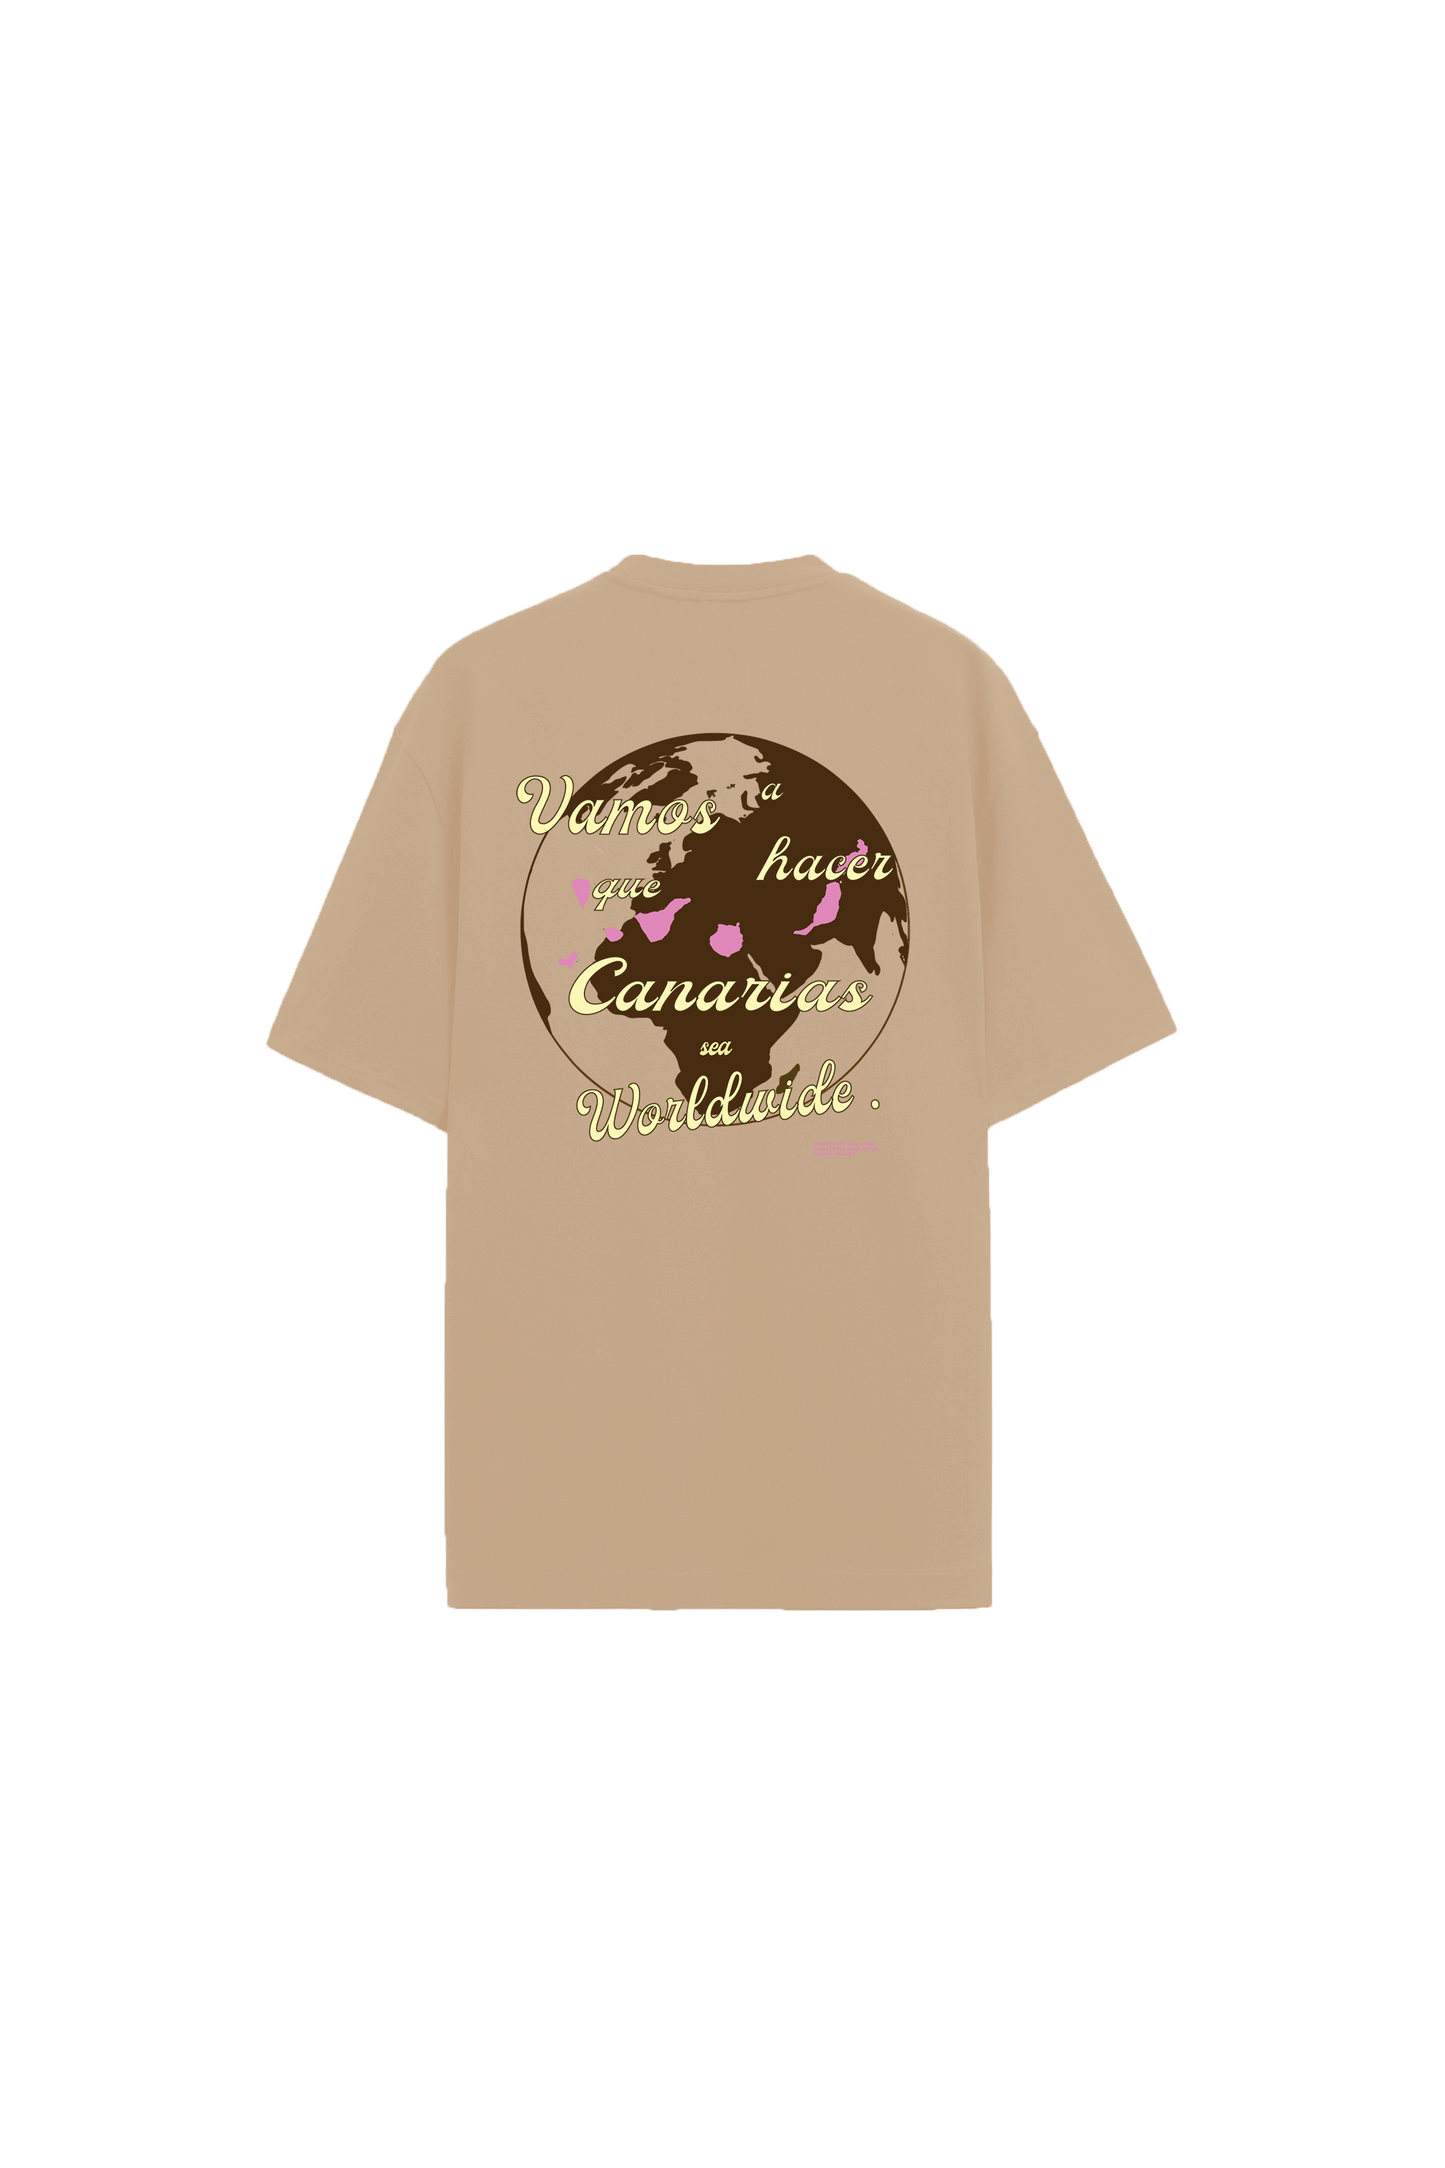 Camiseta Canarias Worldwide